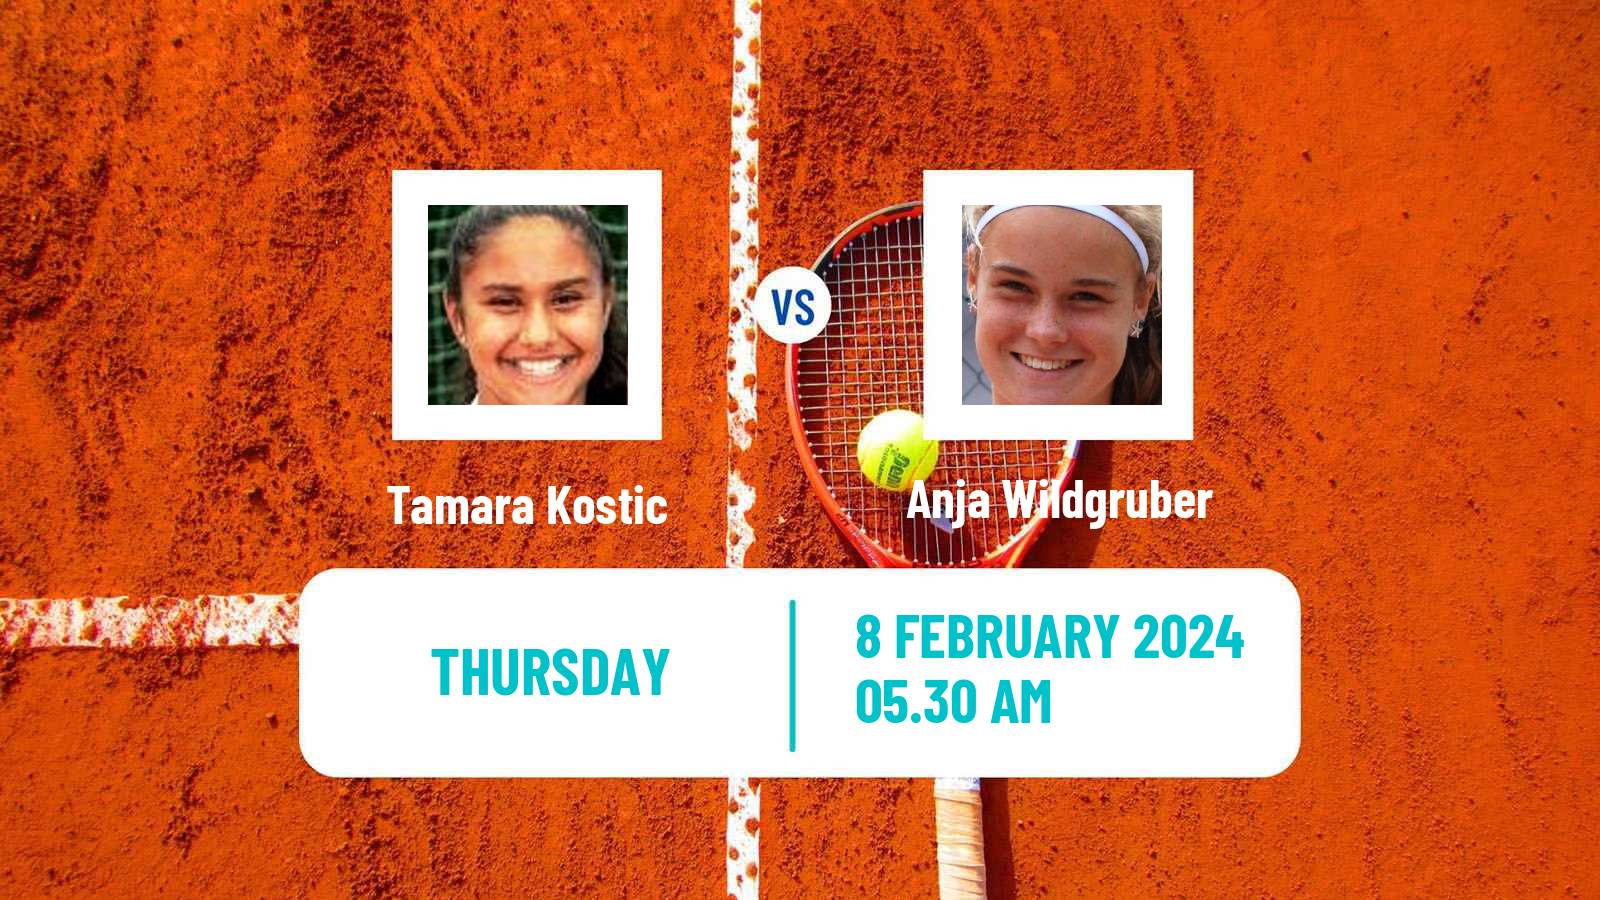 Tennis ITF W15 Monastir 4 Women Tamara Kostic - Anja Wildgruber